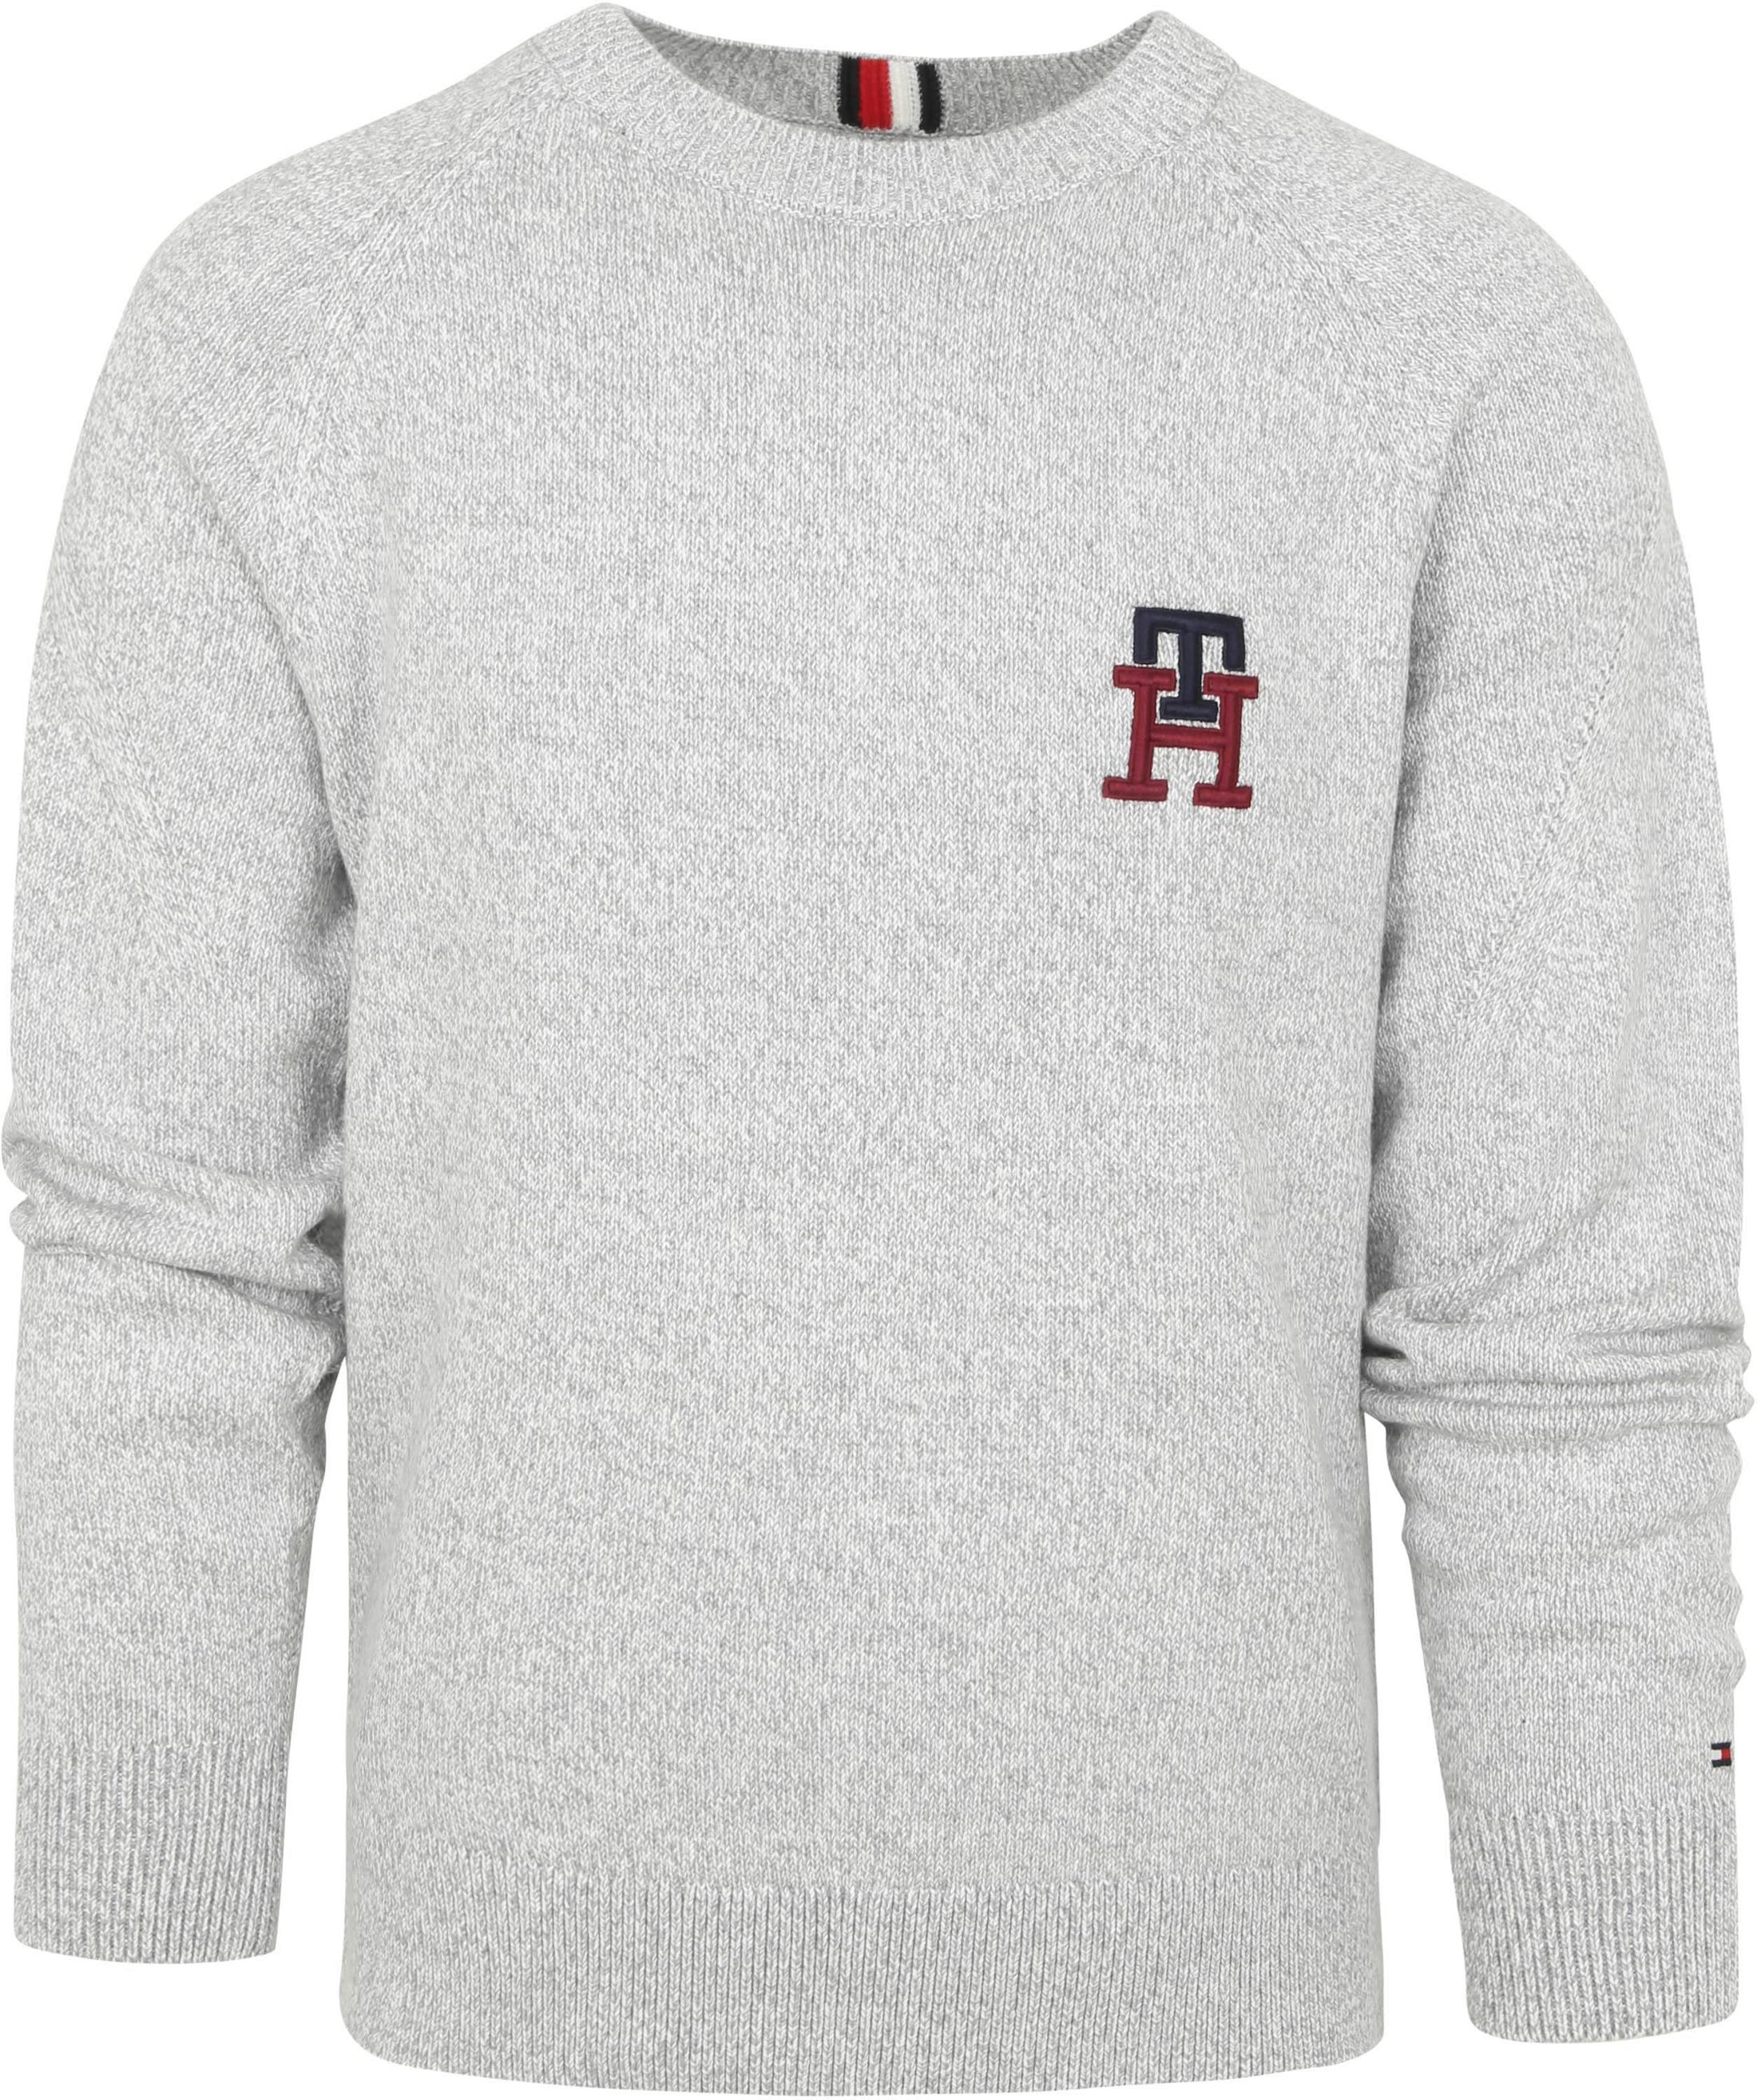 Tommy Hilfiger American Sweater Grey size L